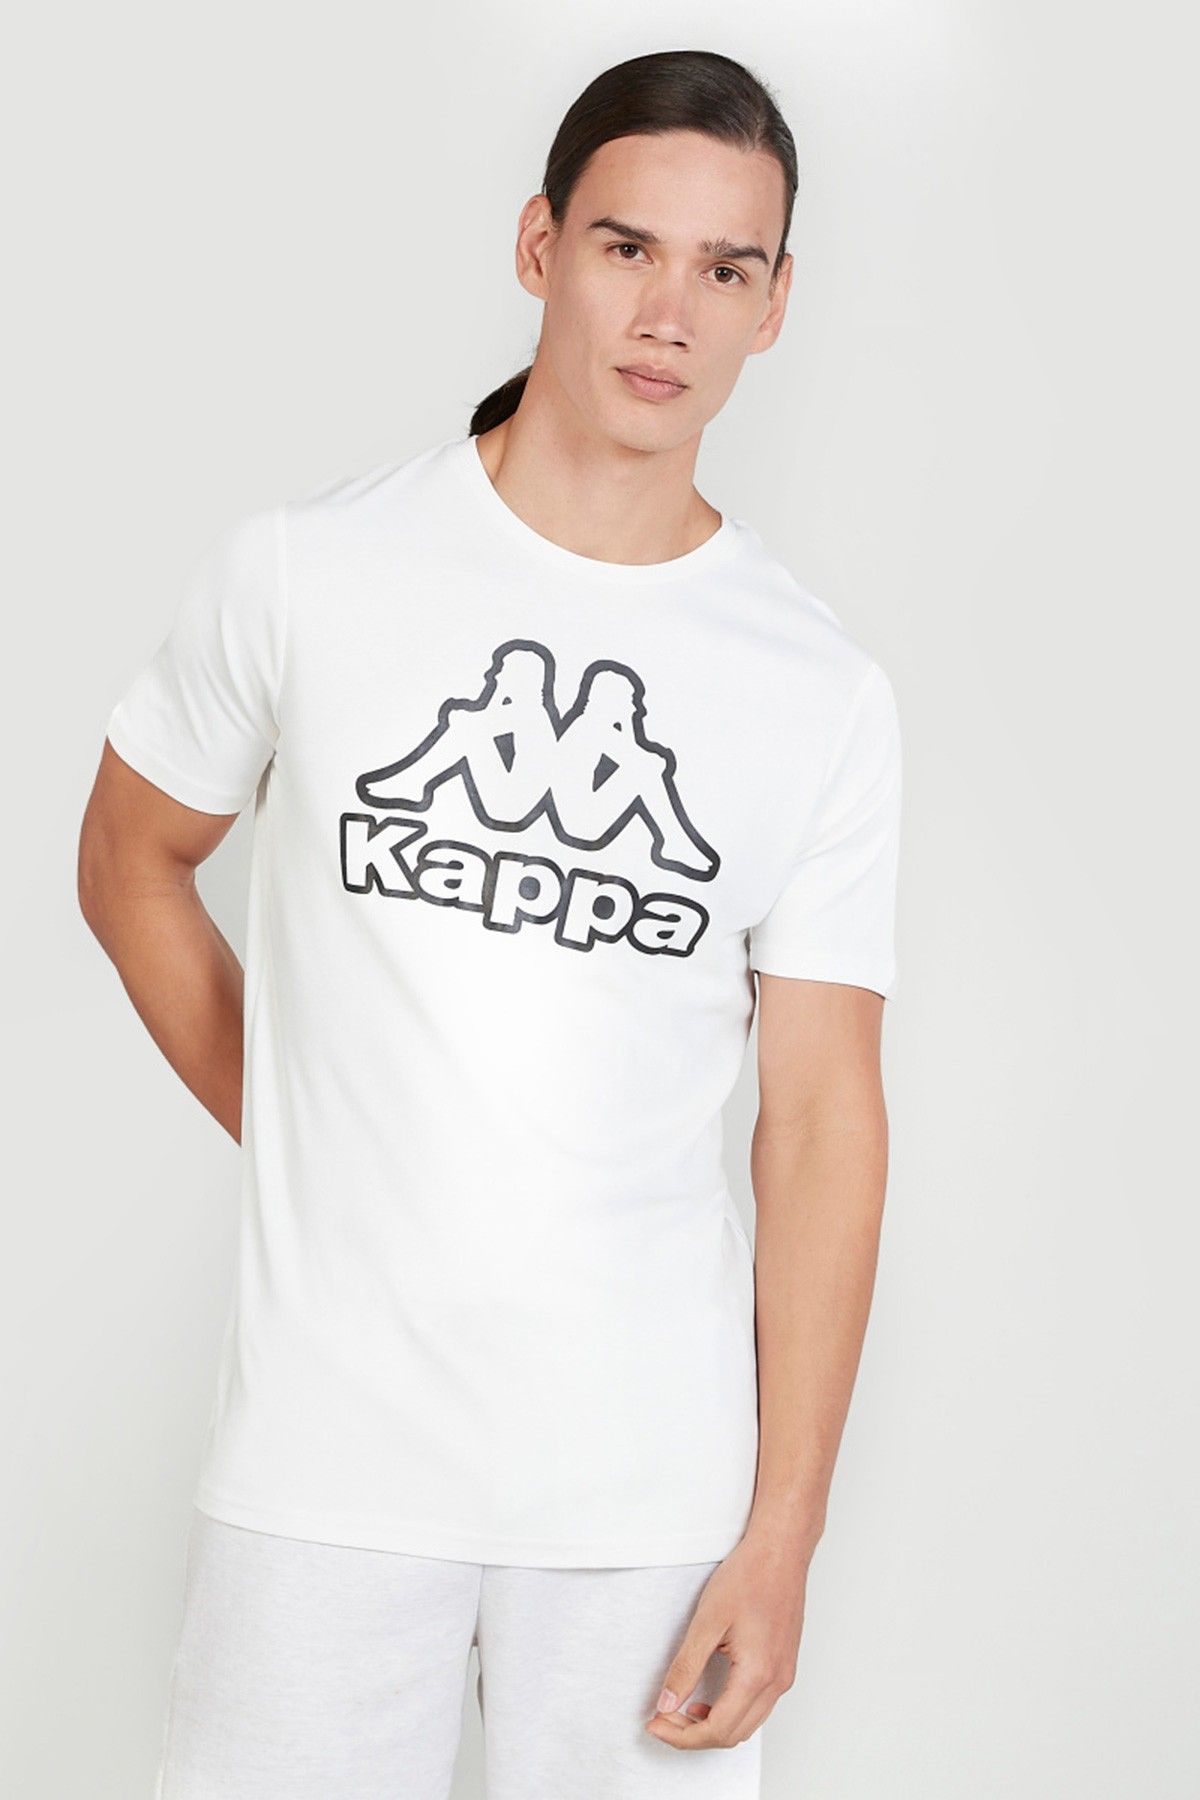 Splash Kappa Printed T-shirt Neck and Sleeves Round Men T-Shirts Short with